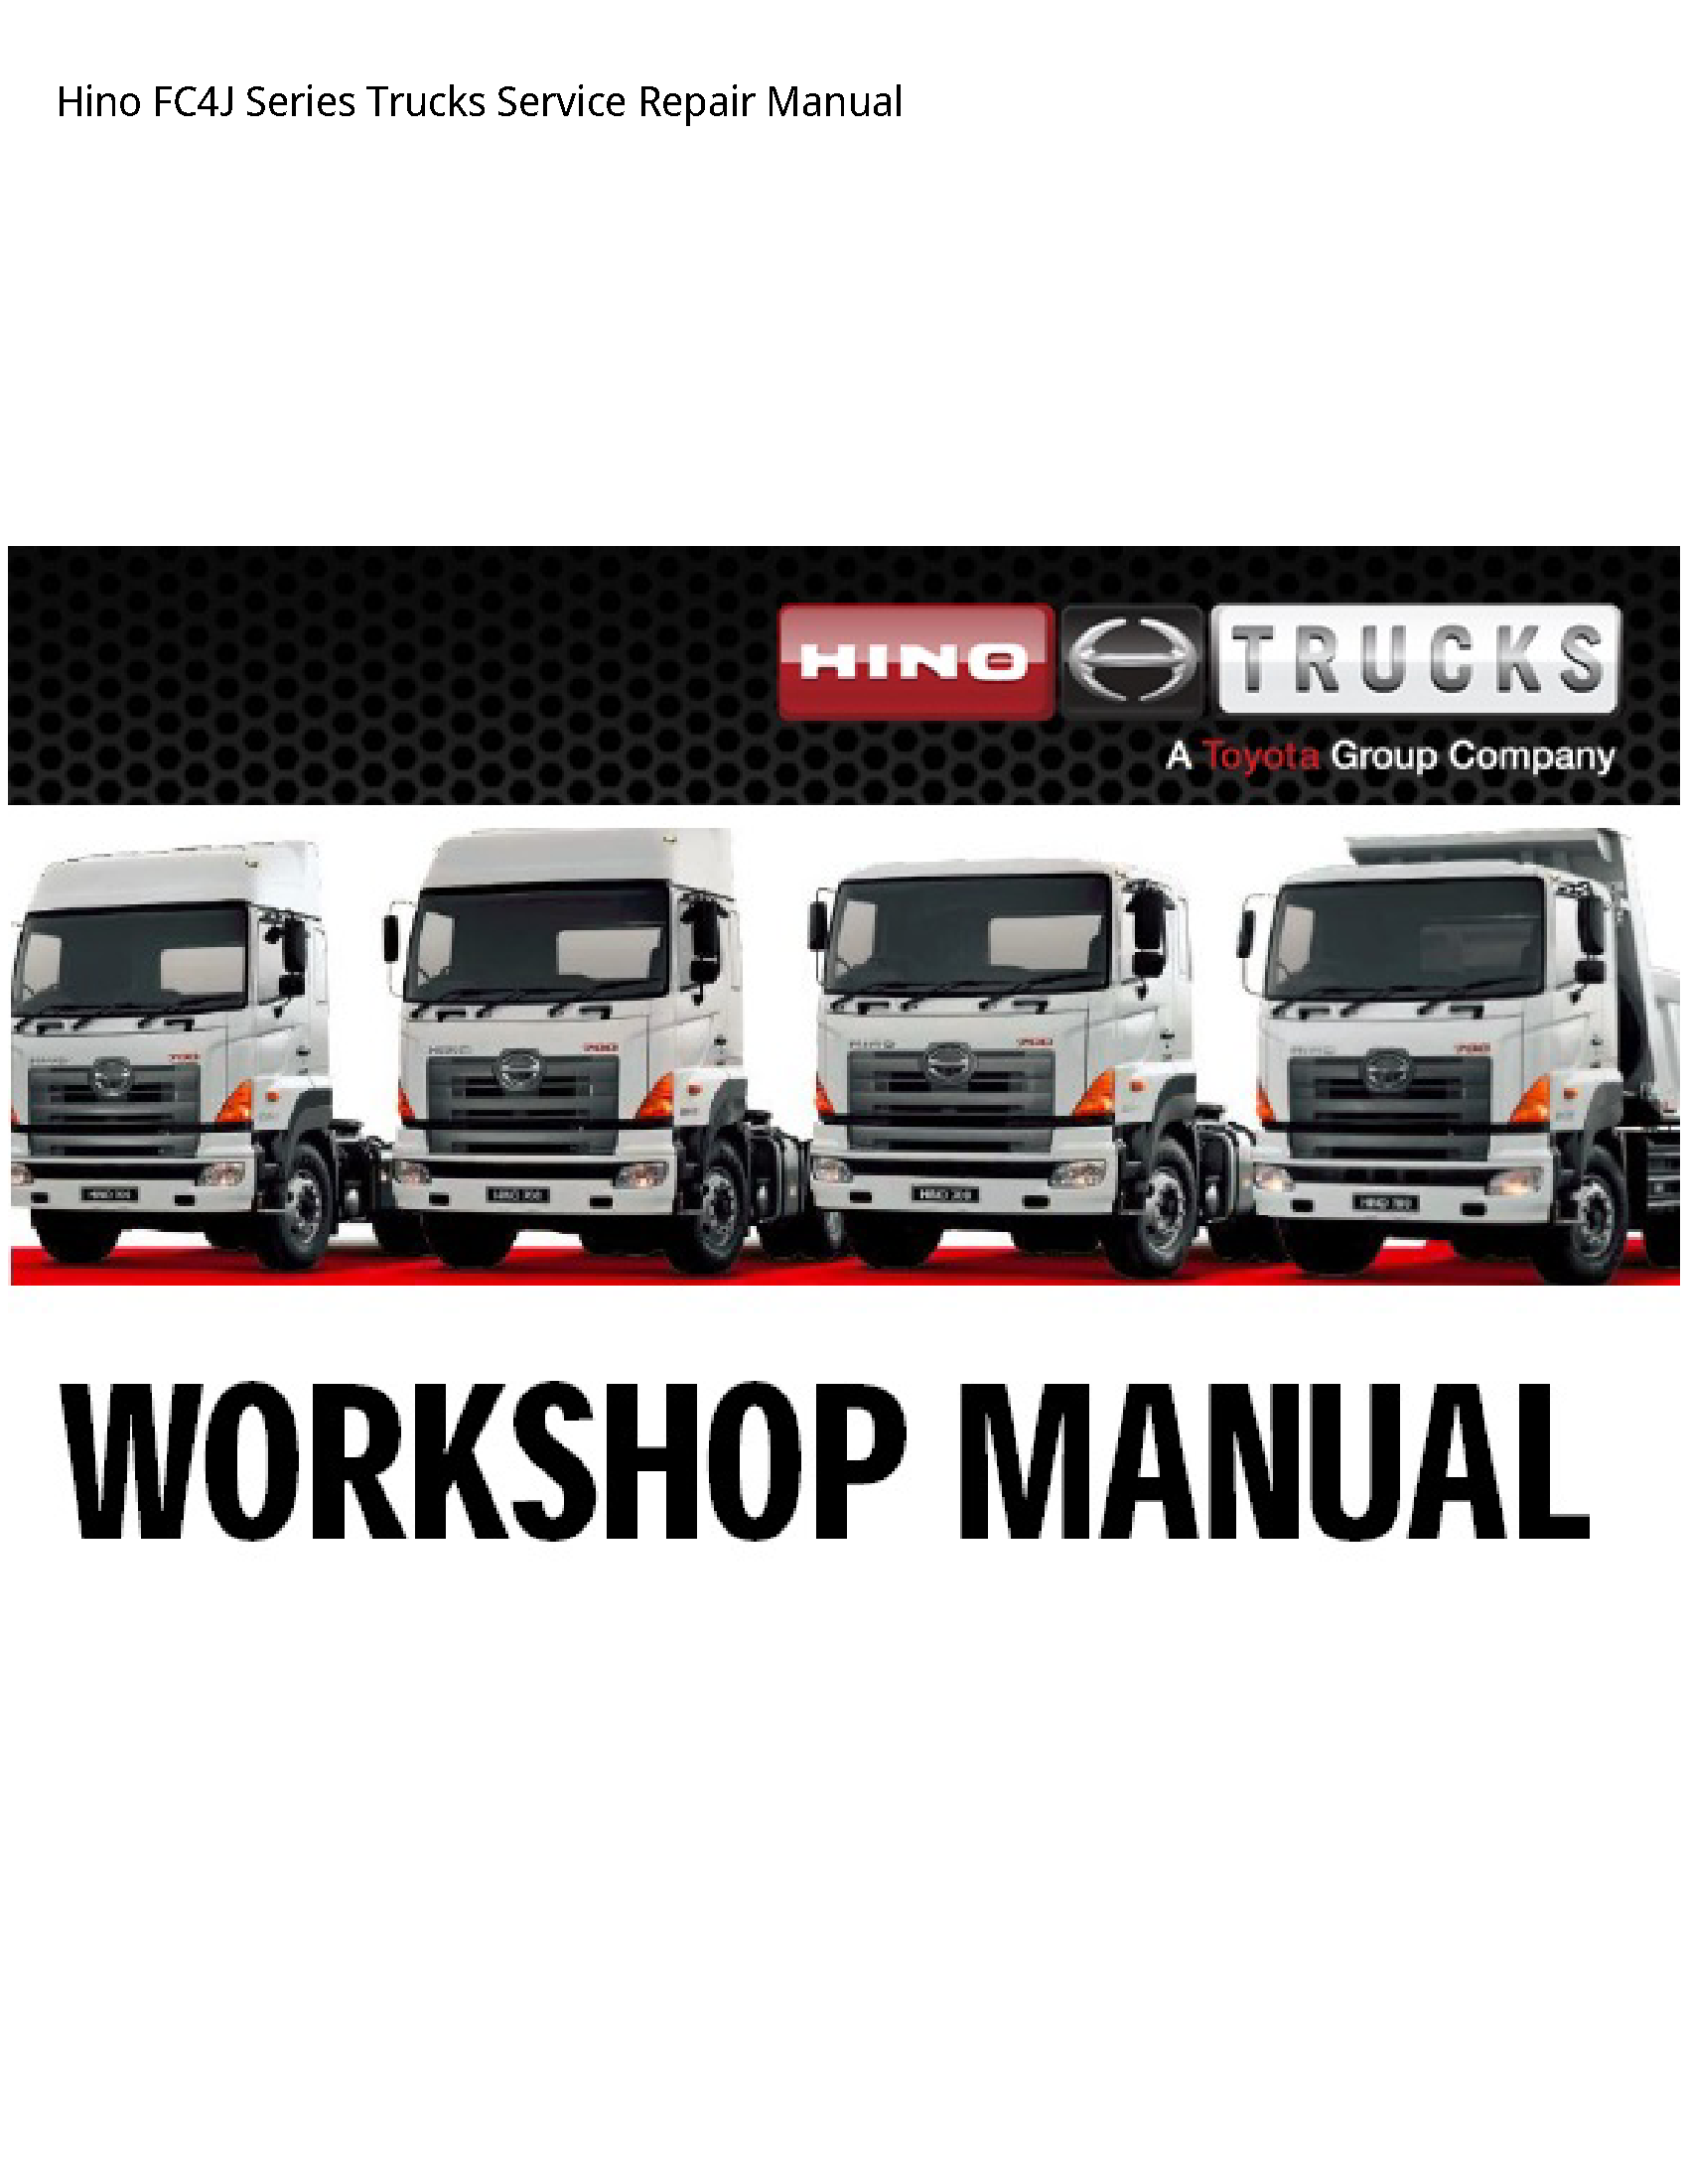 Hino FC4J Series Trucks manual